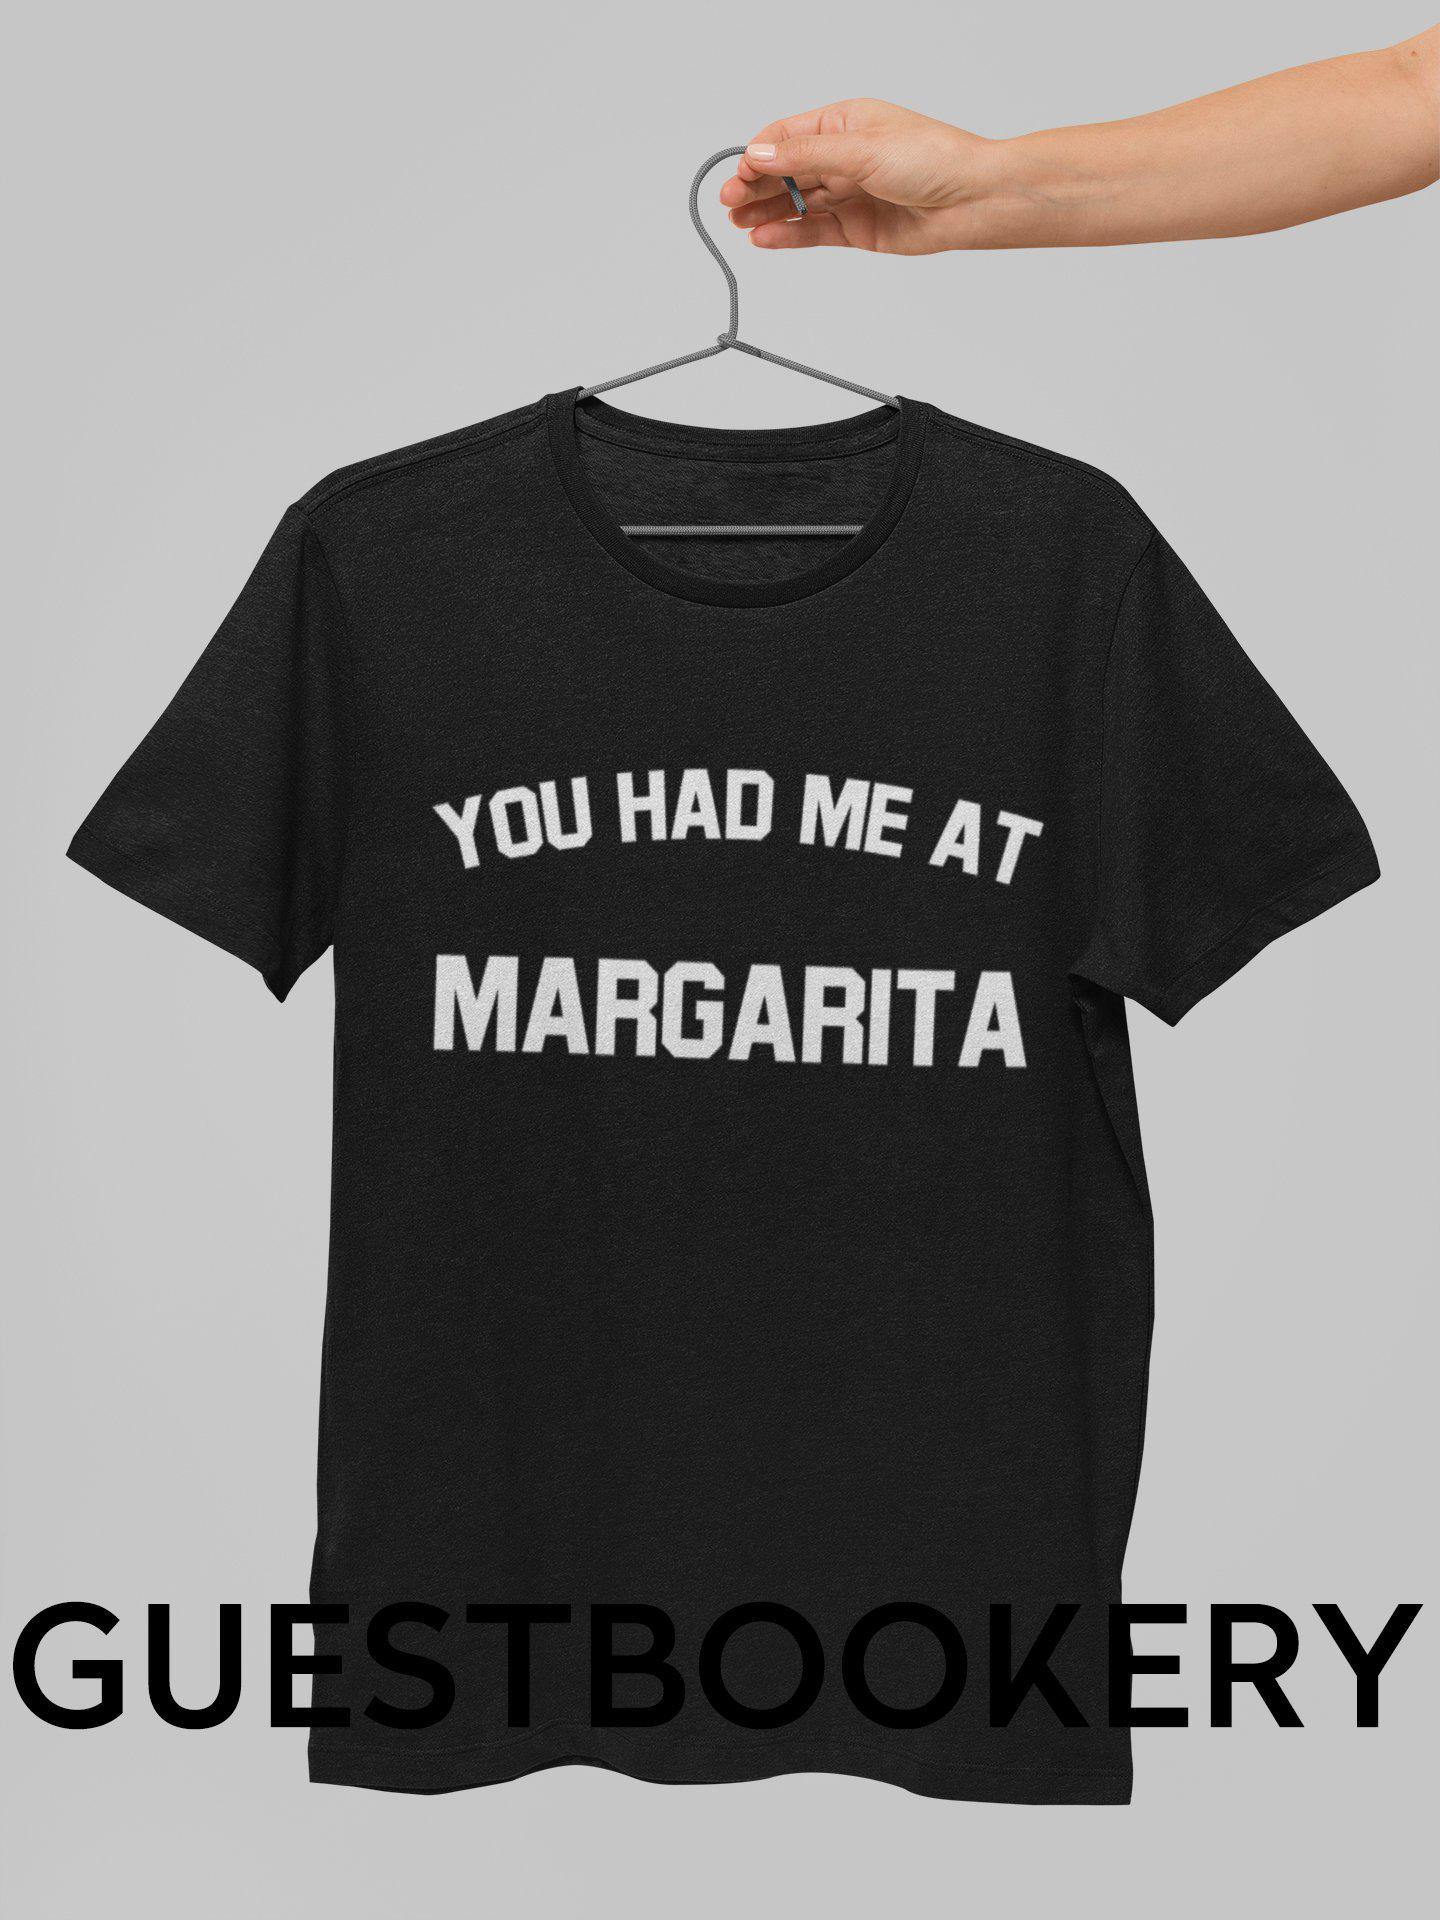 You Had Me at Margarita T-Shirt - Guestbookery